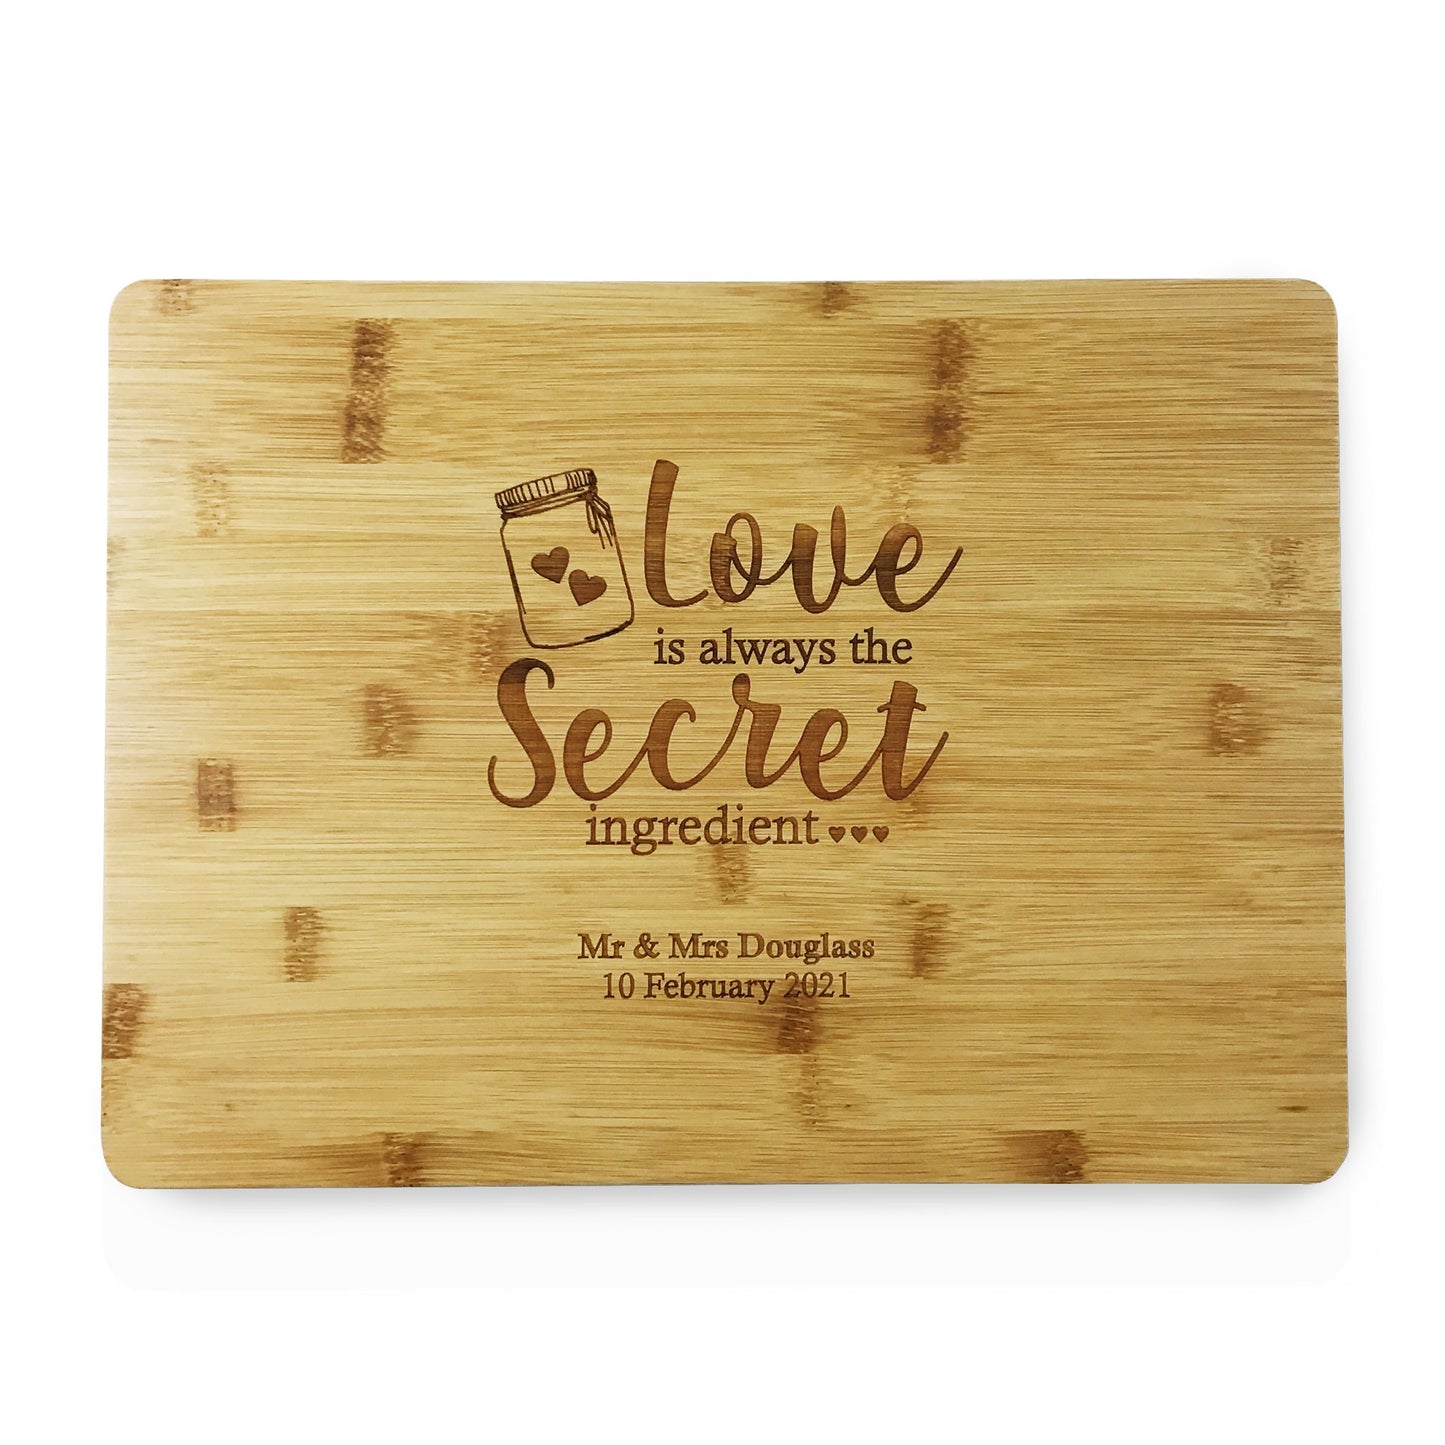 Love is Always the Secret Ingredient Engraved Wooden Chopping Board Wedding Anniversary